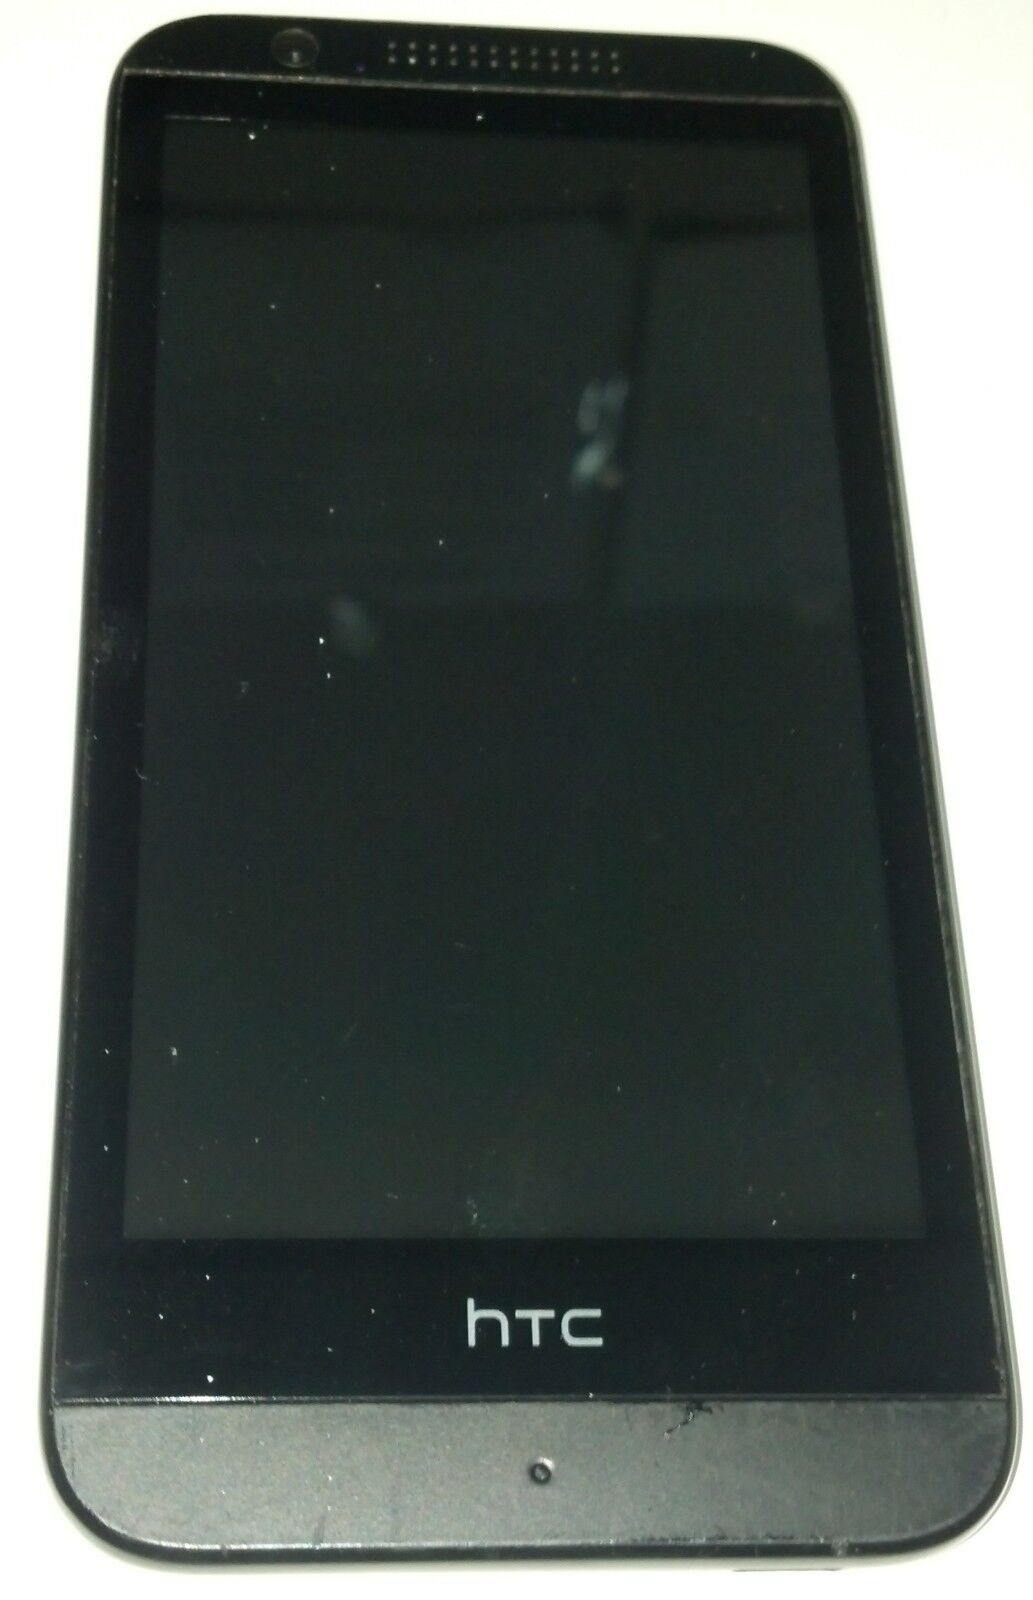 HTC Desire 510 4G LTE Black Virgin Mobile Android Smartphone - Great Condtion Без бренда Desire 4G - фотография #2